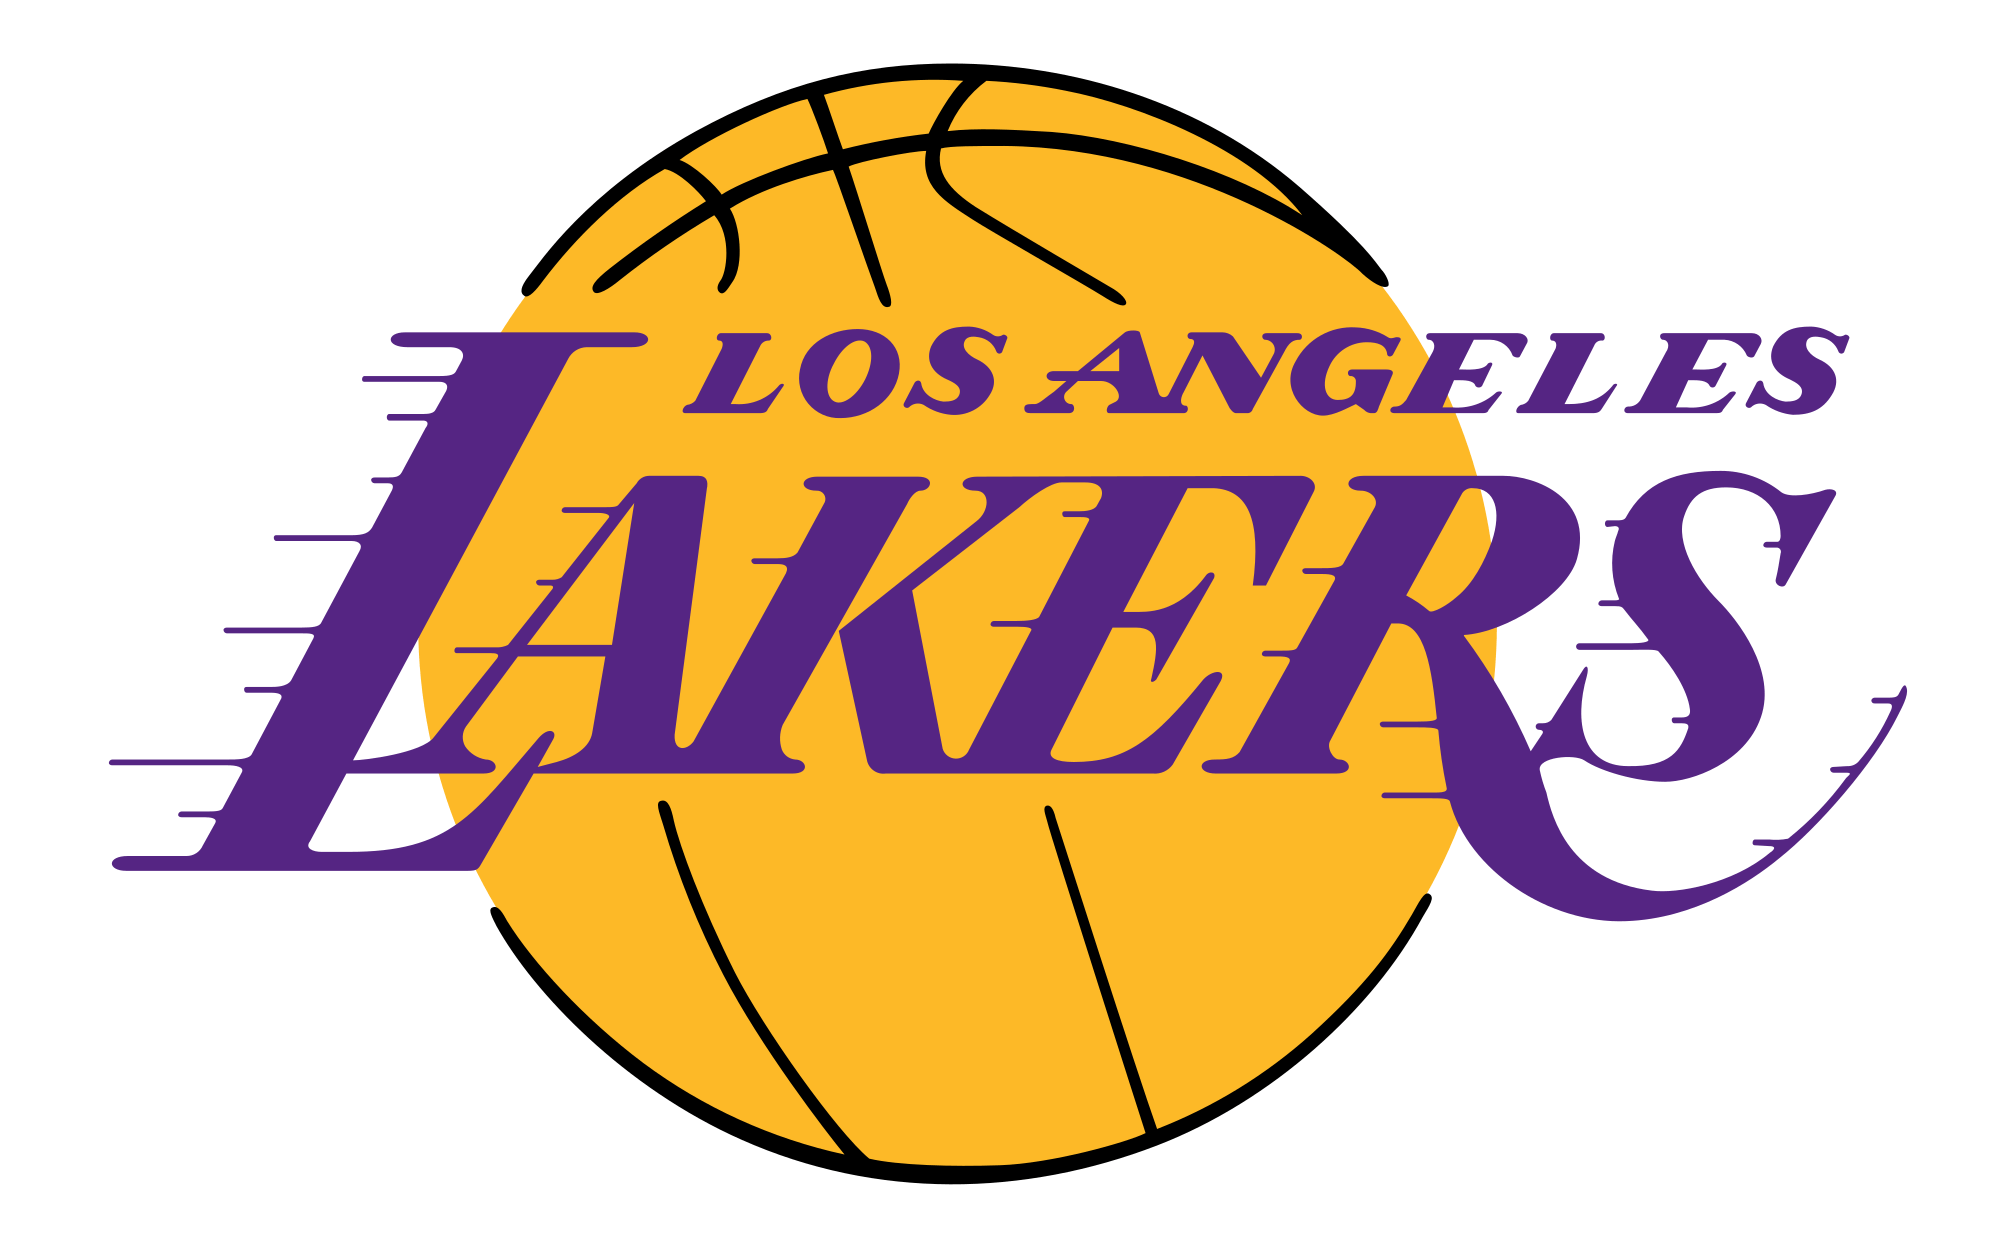 Los Angeles Lakers Logo - Los Angeles Lakers logo.svg